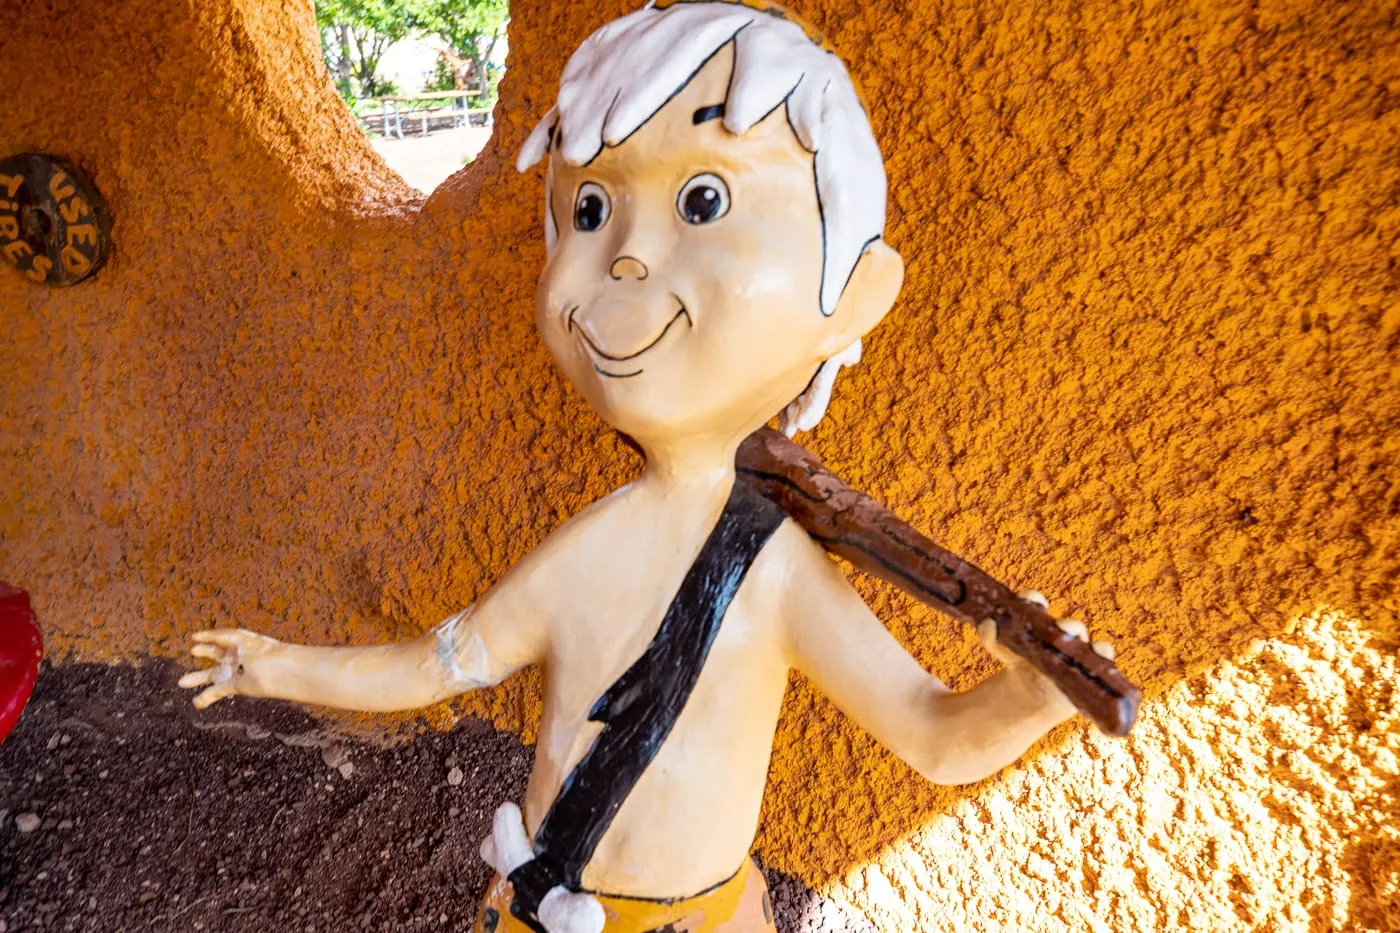 Bamm-Bamm Statue at Flintstones Bedrock City in Williams, Arizona - Arizona Roadside Attraction